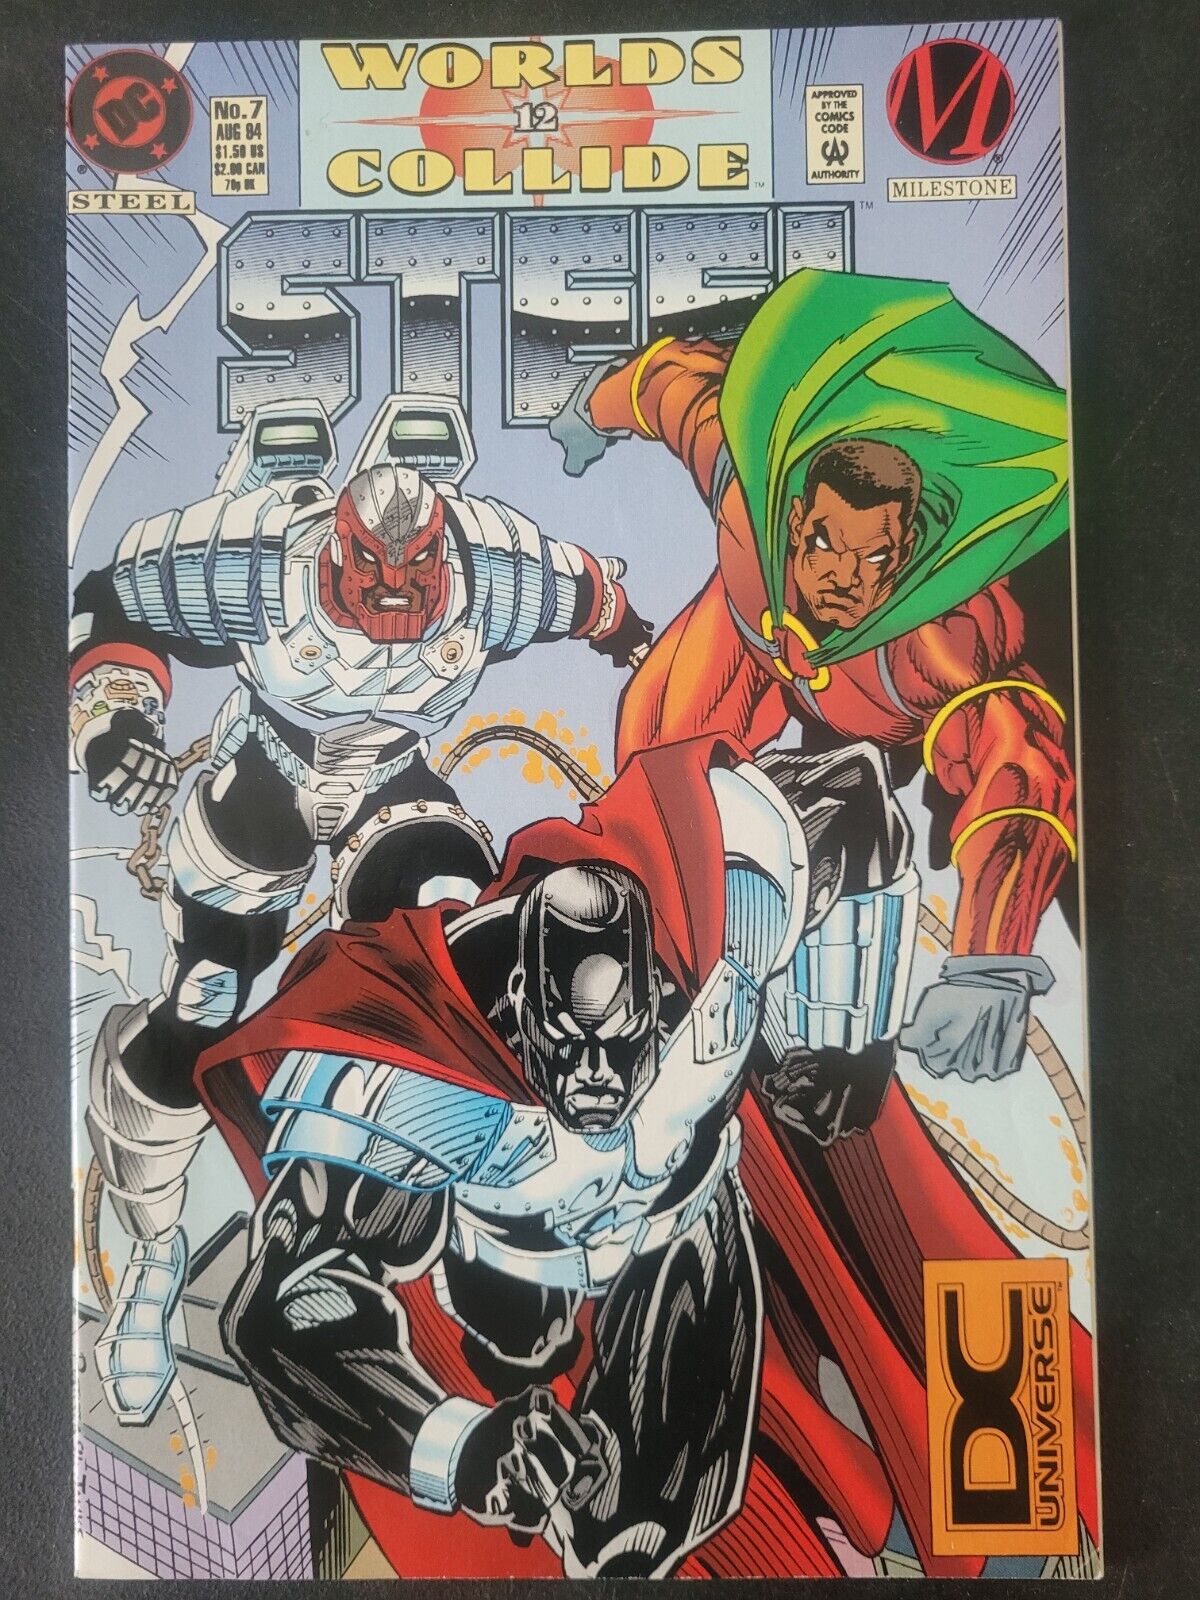 STEEL #7 (1994) DC COMICS WORLDS COLLIDE MILESTONE DC UNIVERSE UPC LOGO VARIANT